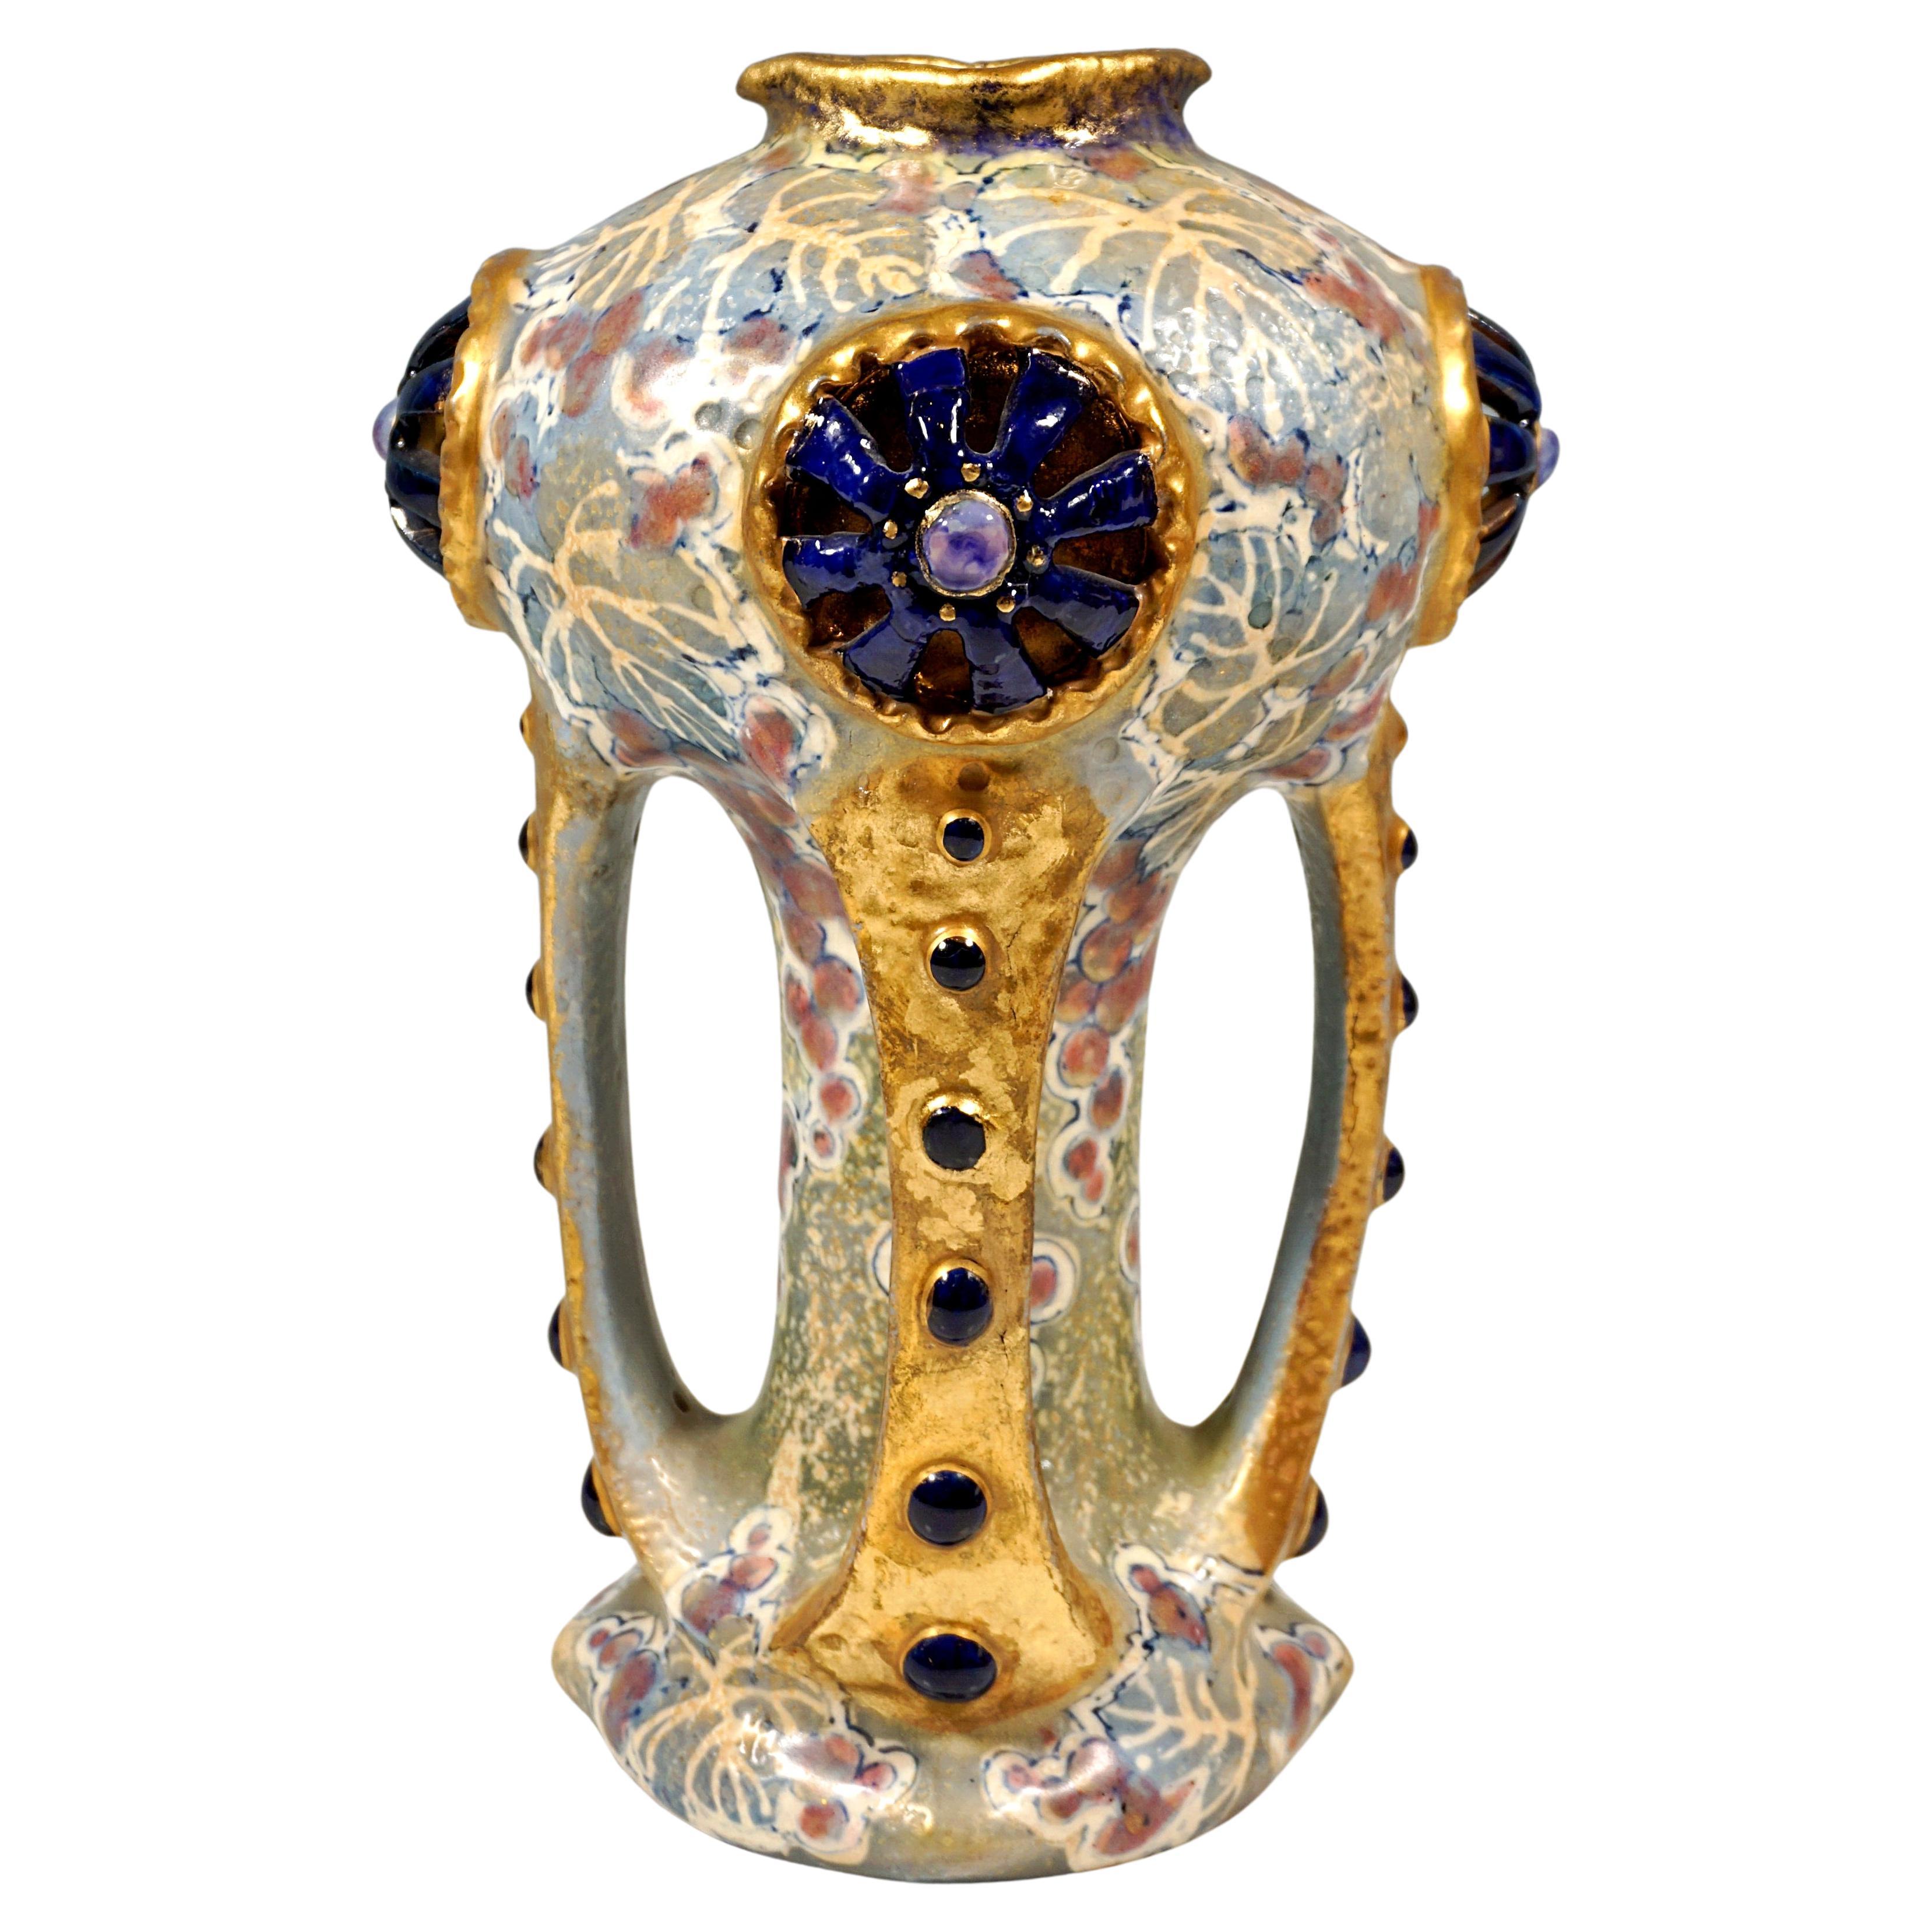 Art Nouveau Ceramic Vase, Amphora Riessner Stellmacher & Kessel, Austria c. 1910